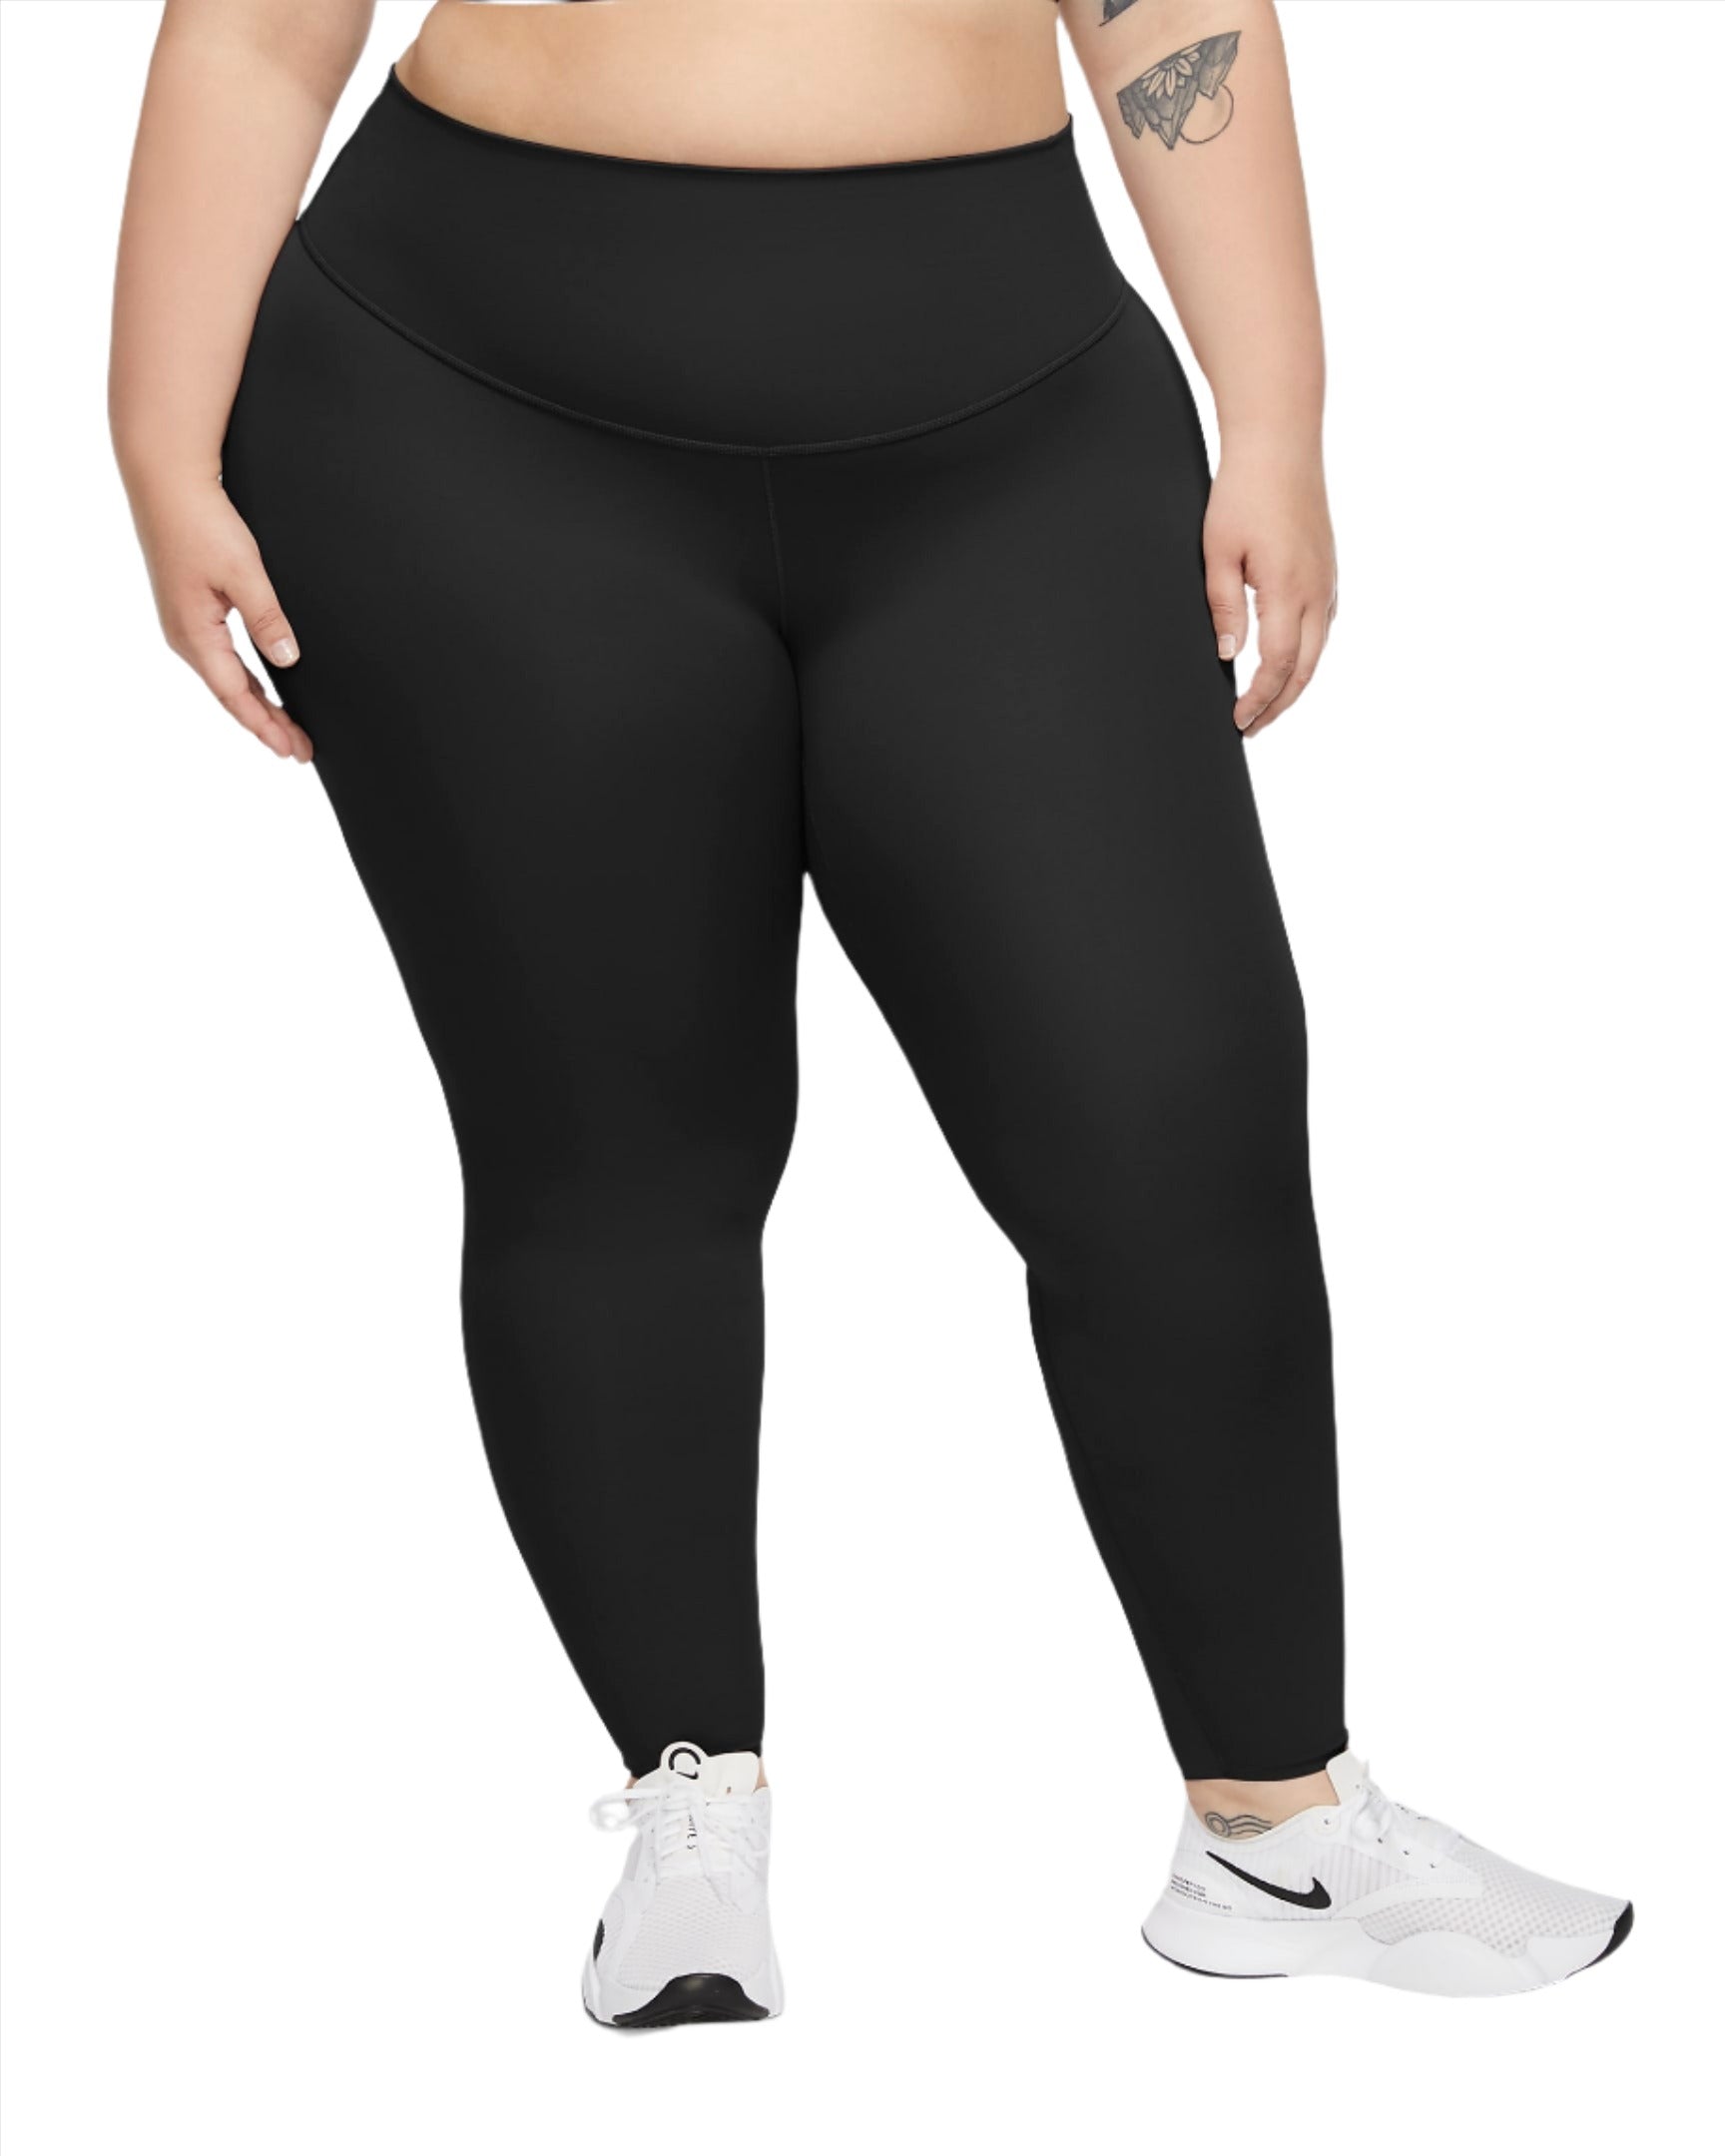 Black Buttery Soft Leggings - Plus Size XL-2X, Online Store